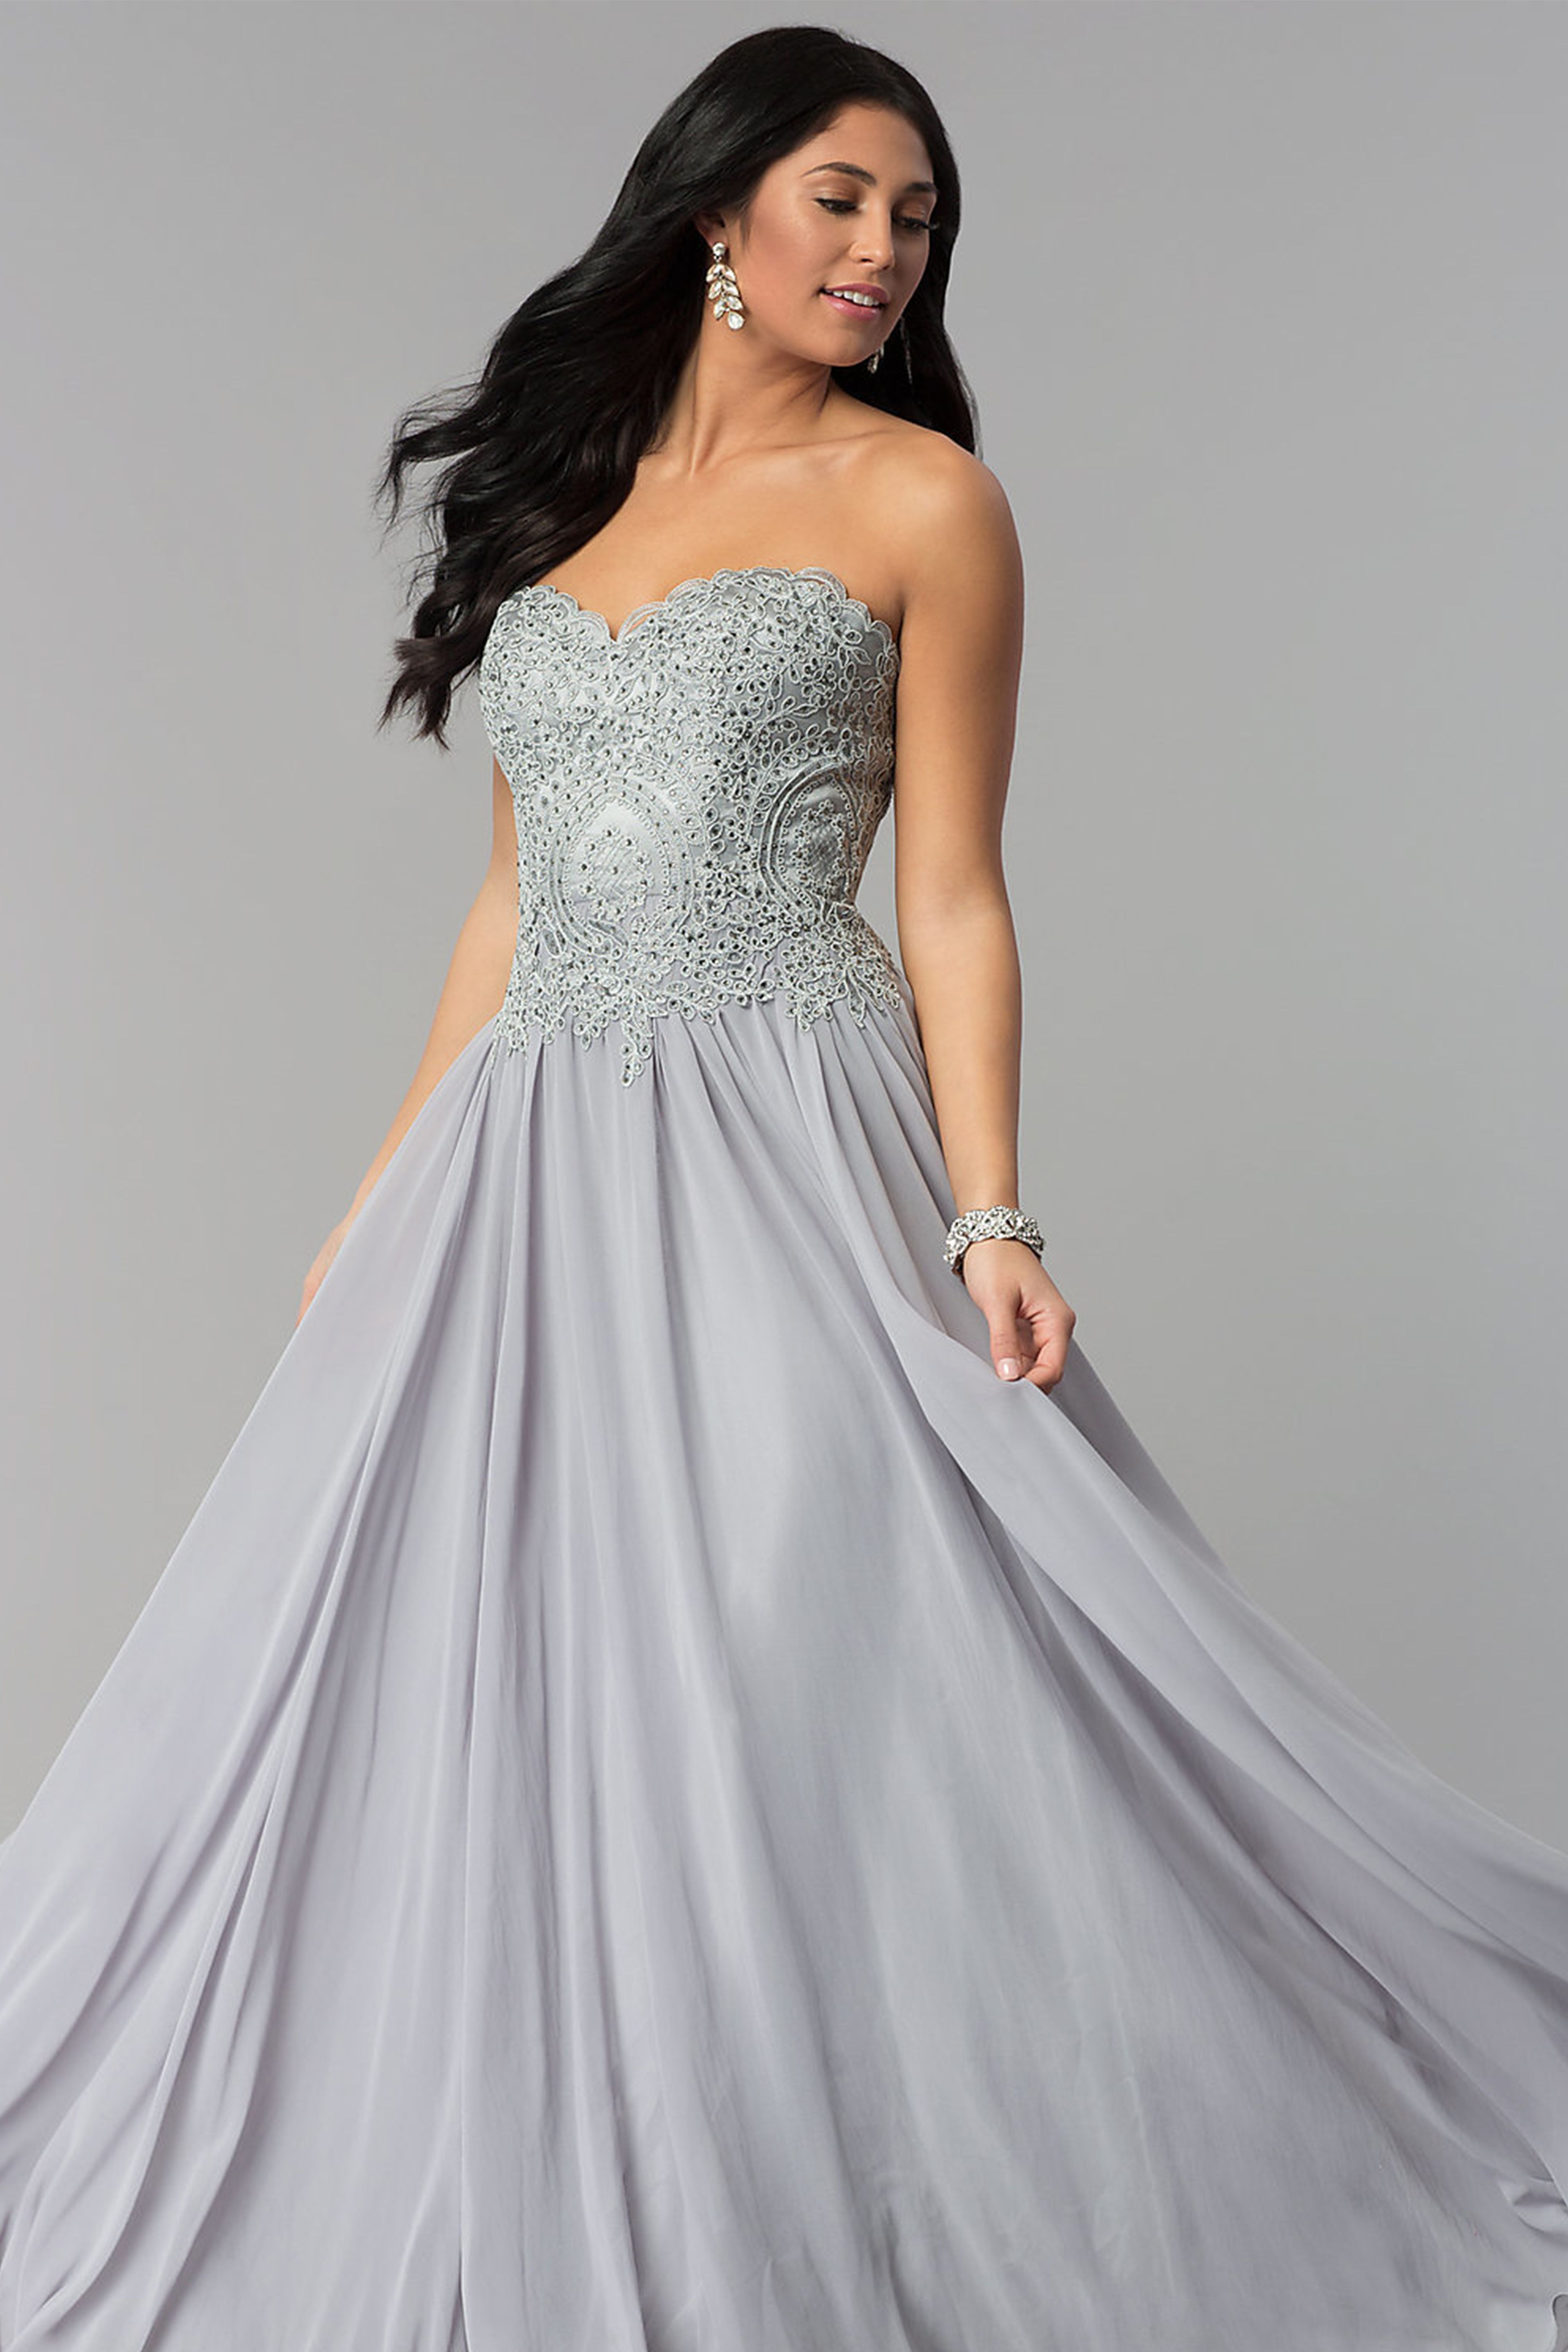 Embroidered Long-Sleeve Grey Undertone Wedding Dress | Silver wedding  dress, Dream wedding dresses, Grey wedding dress